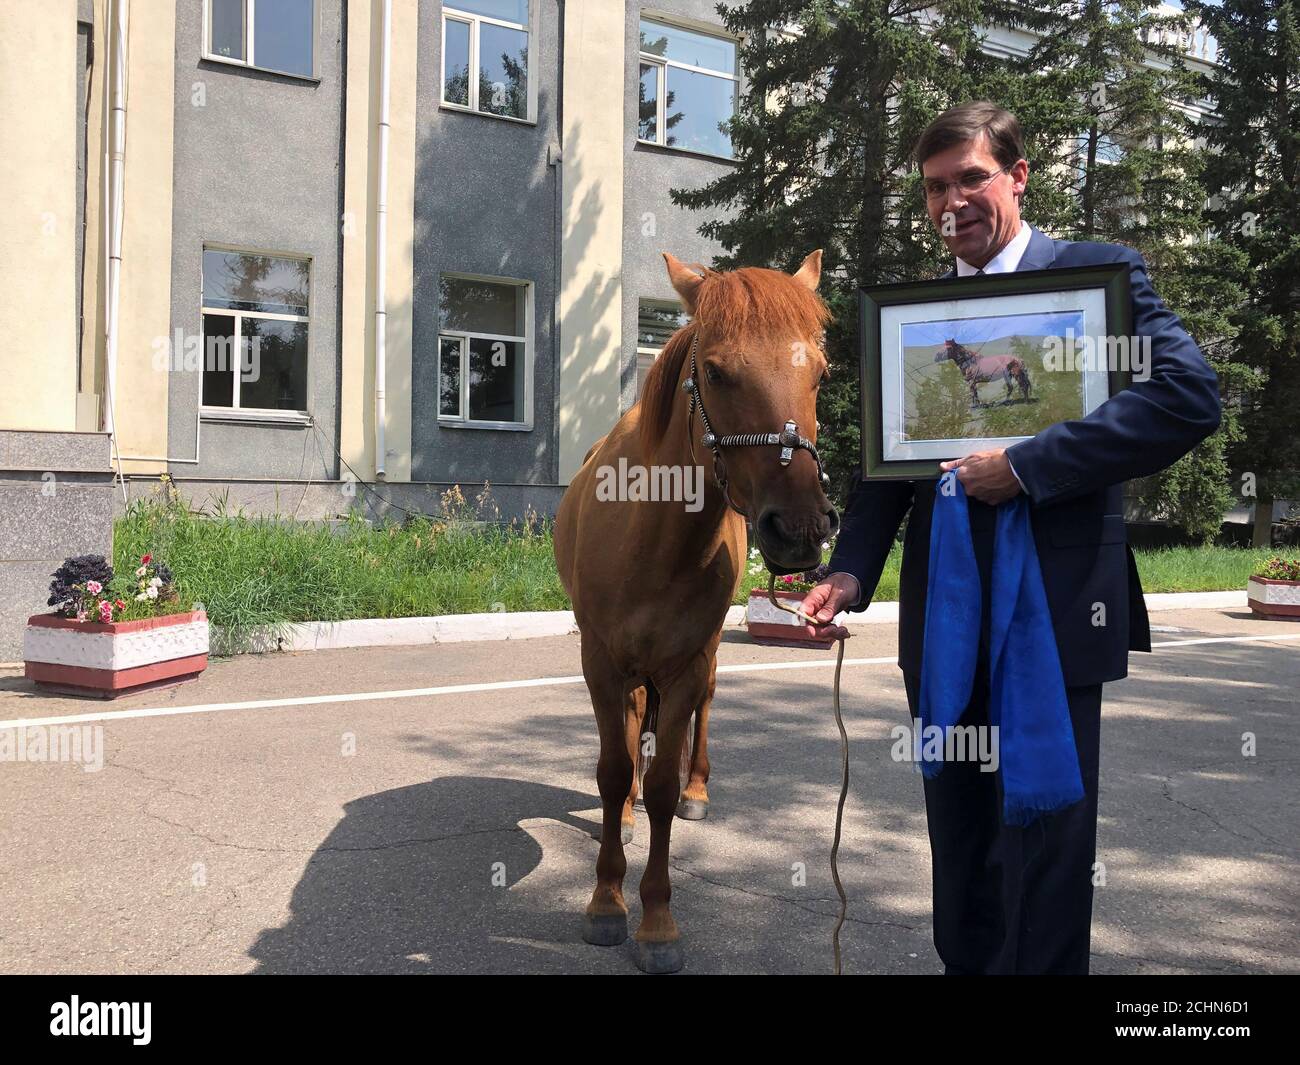 U.S. Secretary of Defense Mark Esper is gifted a horse in Ulan Bator, Mongolia August 8, 2019. REUTERS/Idrees Ali Stock Photo